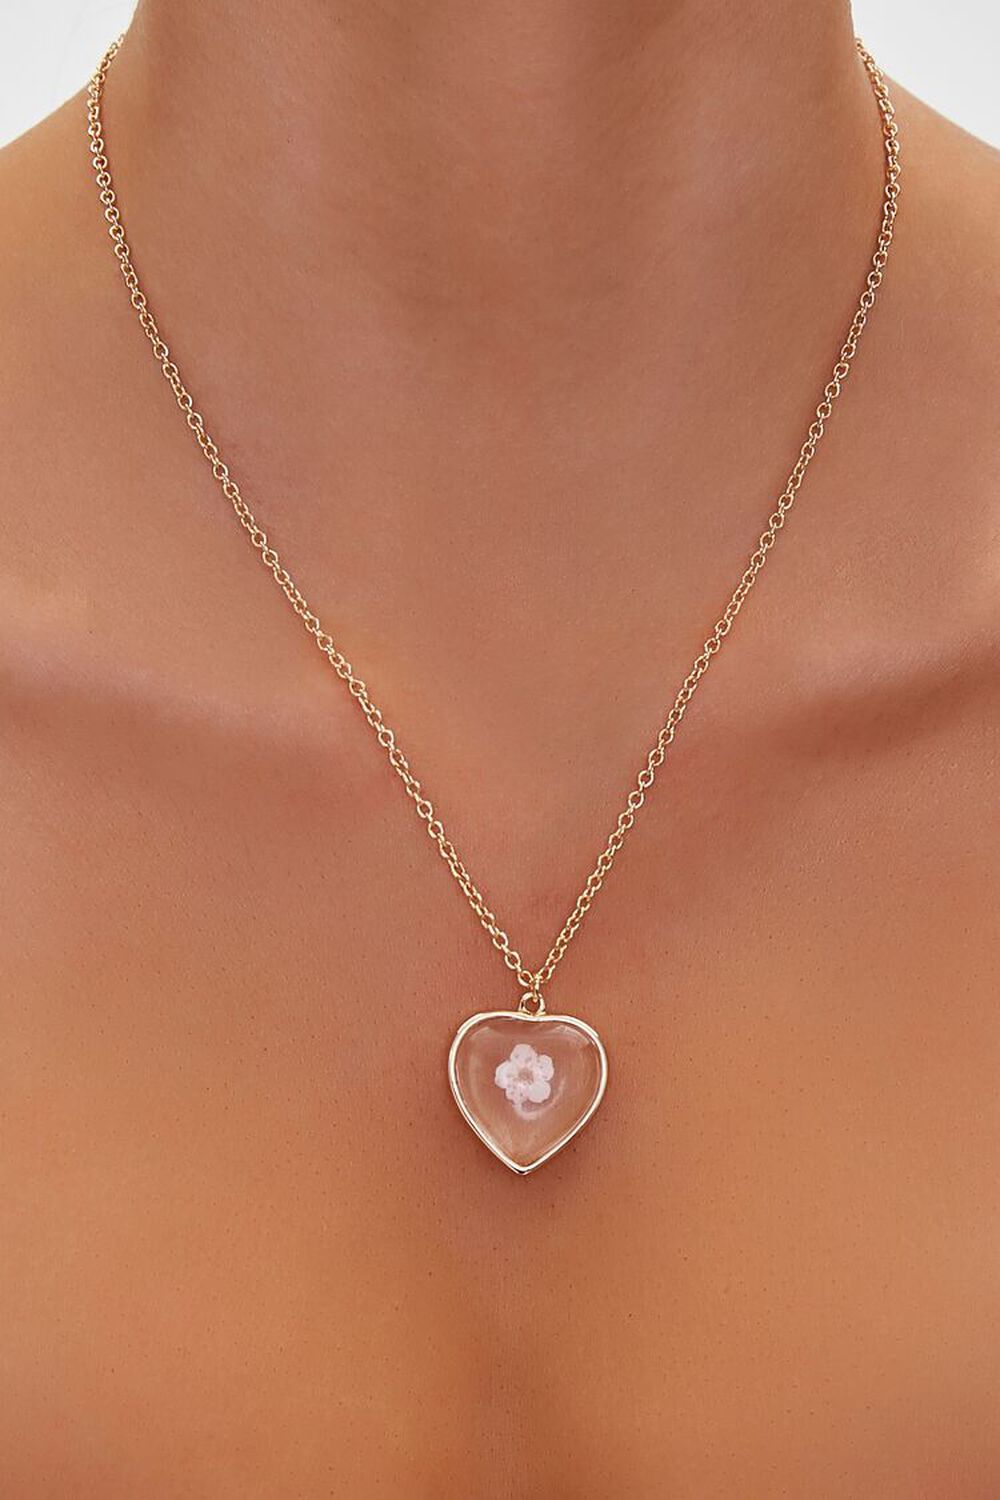 GOLD/PINK Floral Heart Pendant Necklace, image 1